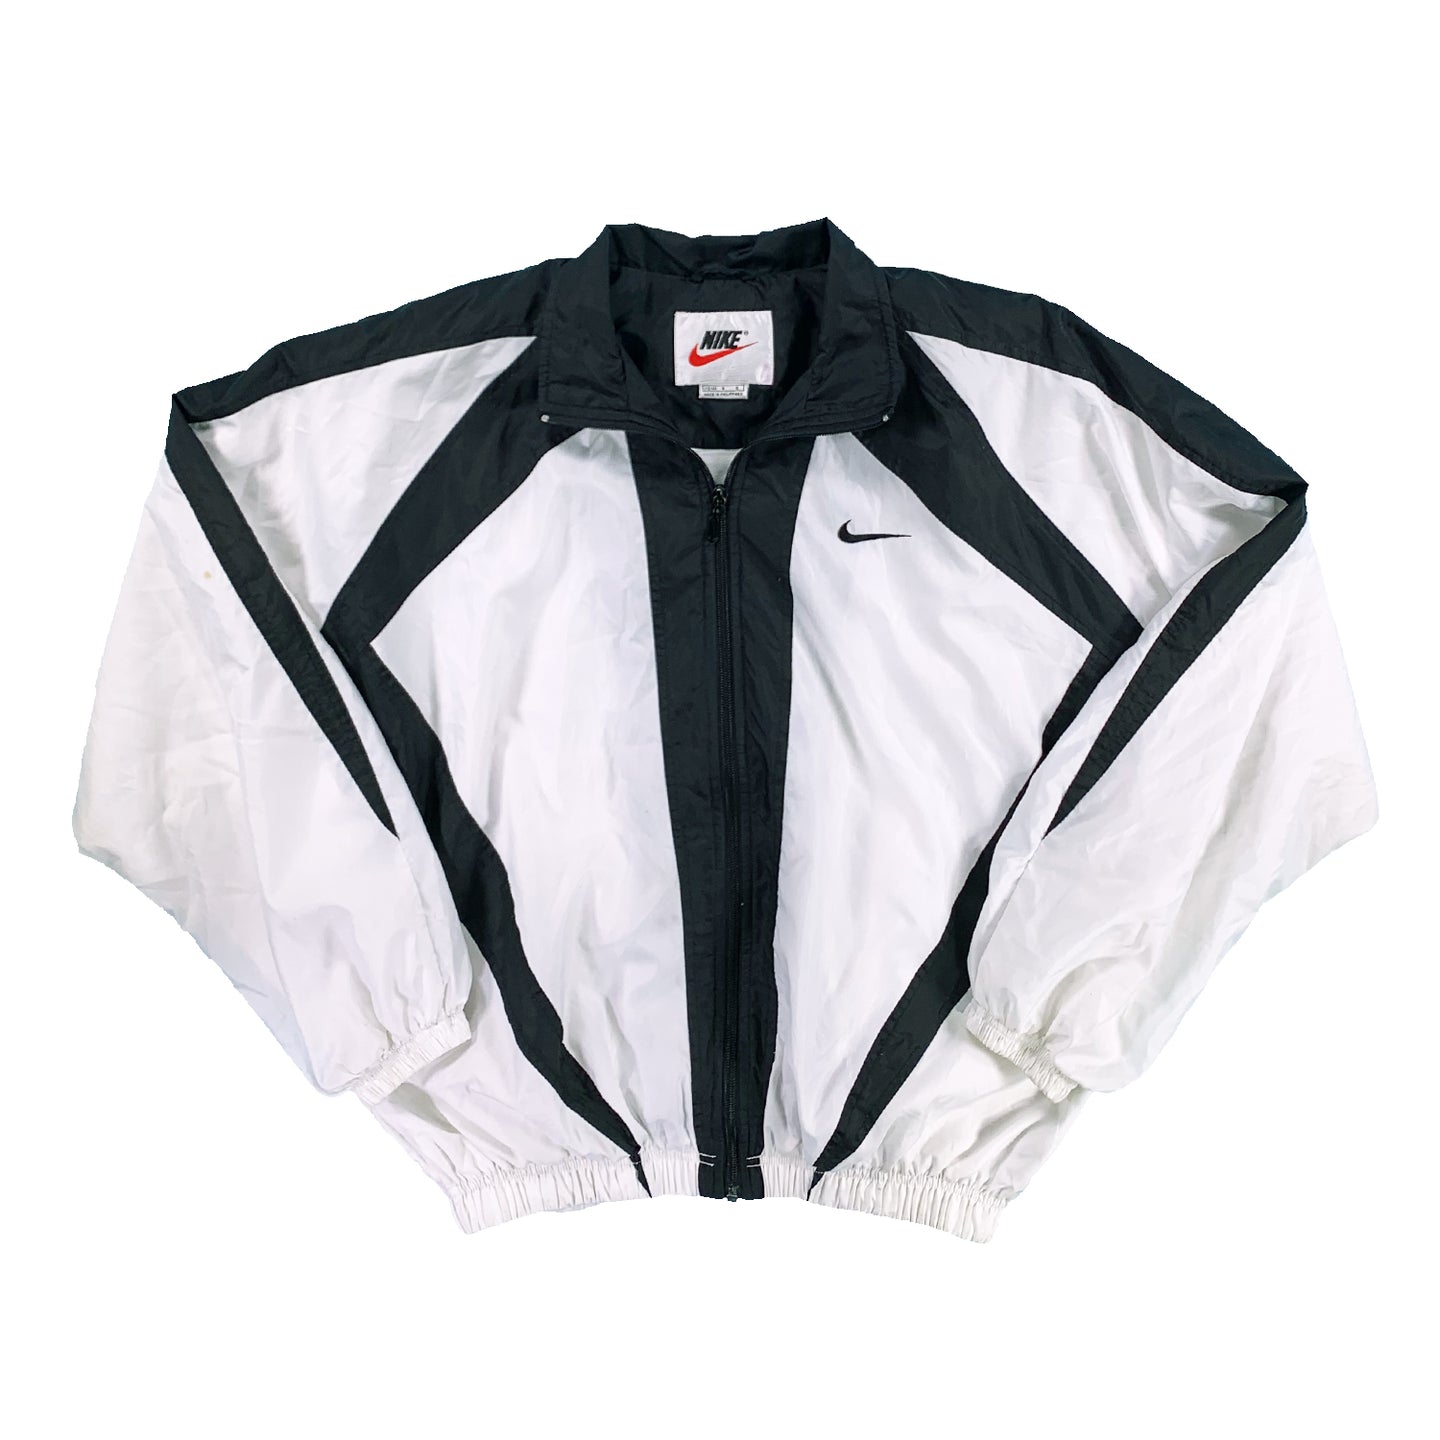 '90s Nike black and white track jacket XL